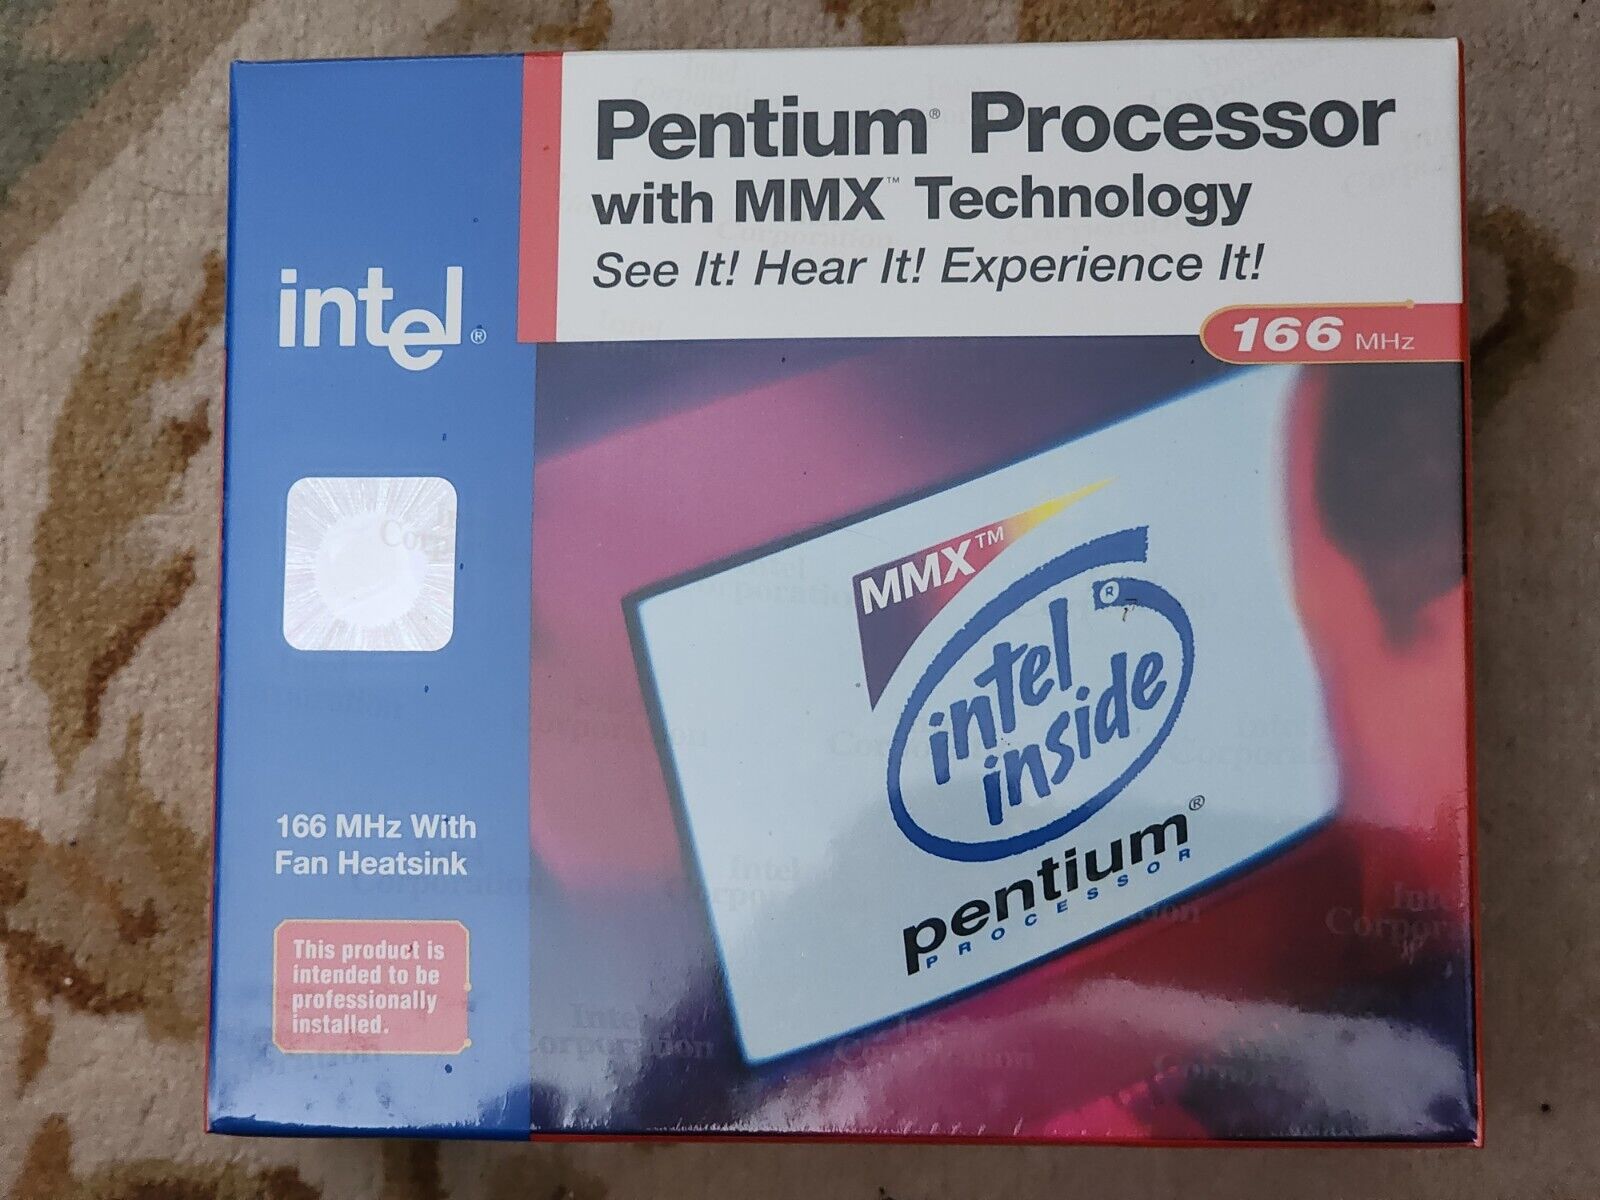 Vintage Intel Pentium w/MMX tech 166 FV80503166 SL27H/2.8v Socket 7 CPU Gold